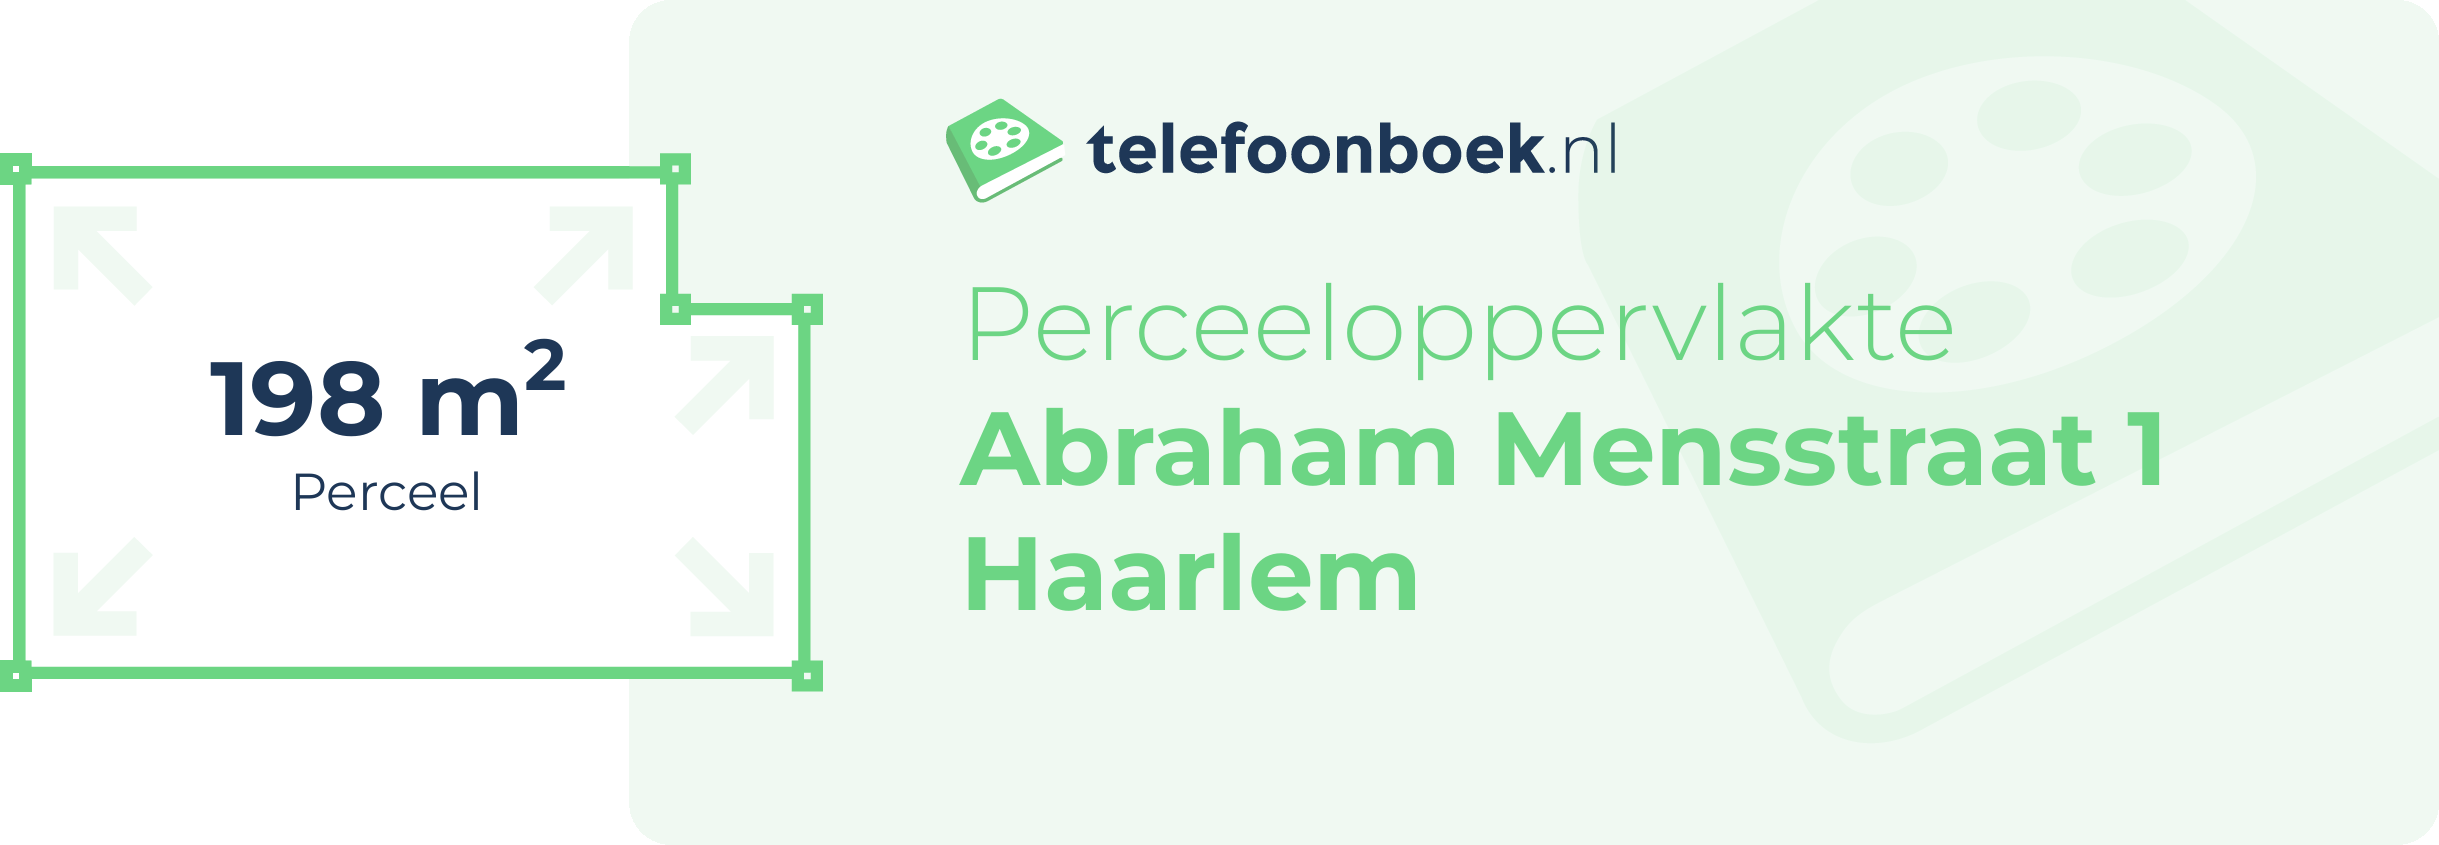 Perceeloppervlakte Abraham Mensstraat 1 Haarlem